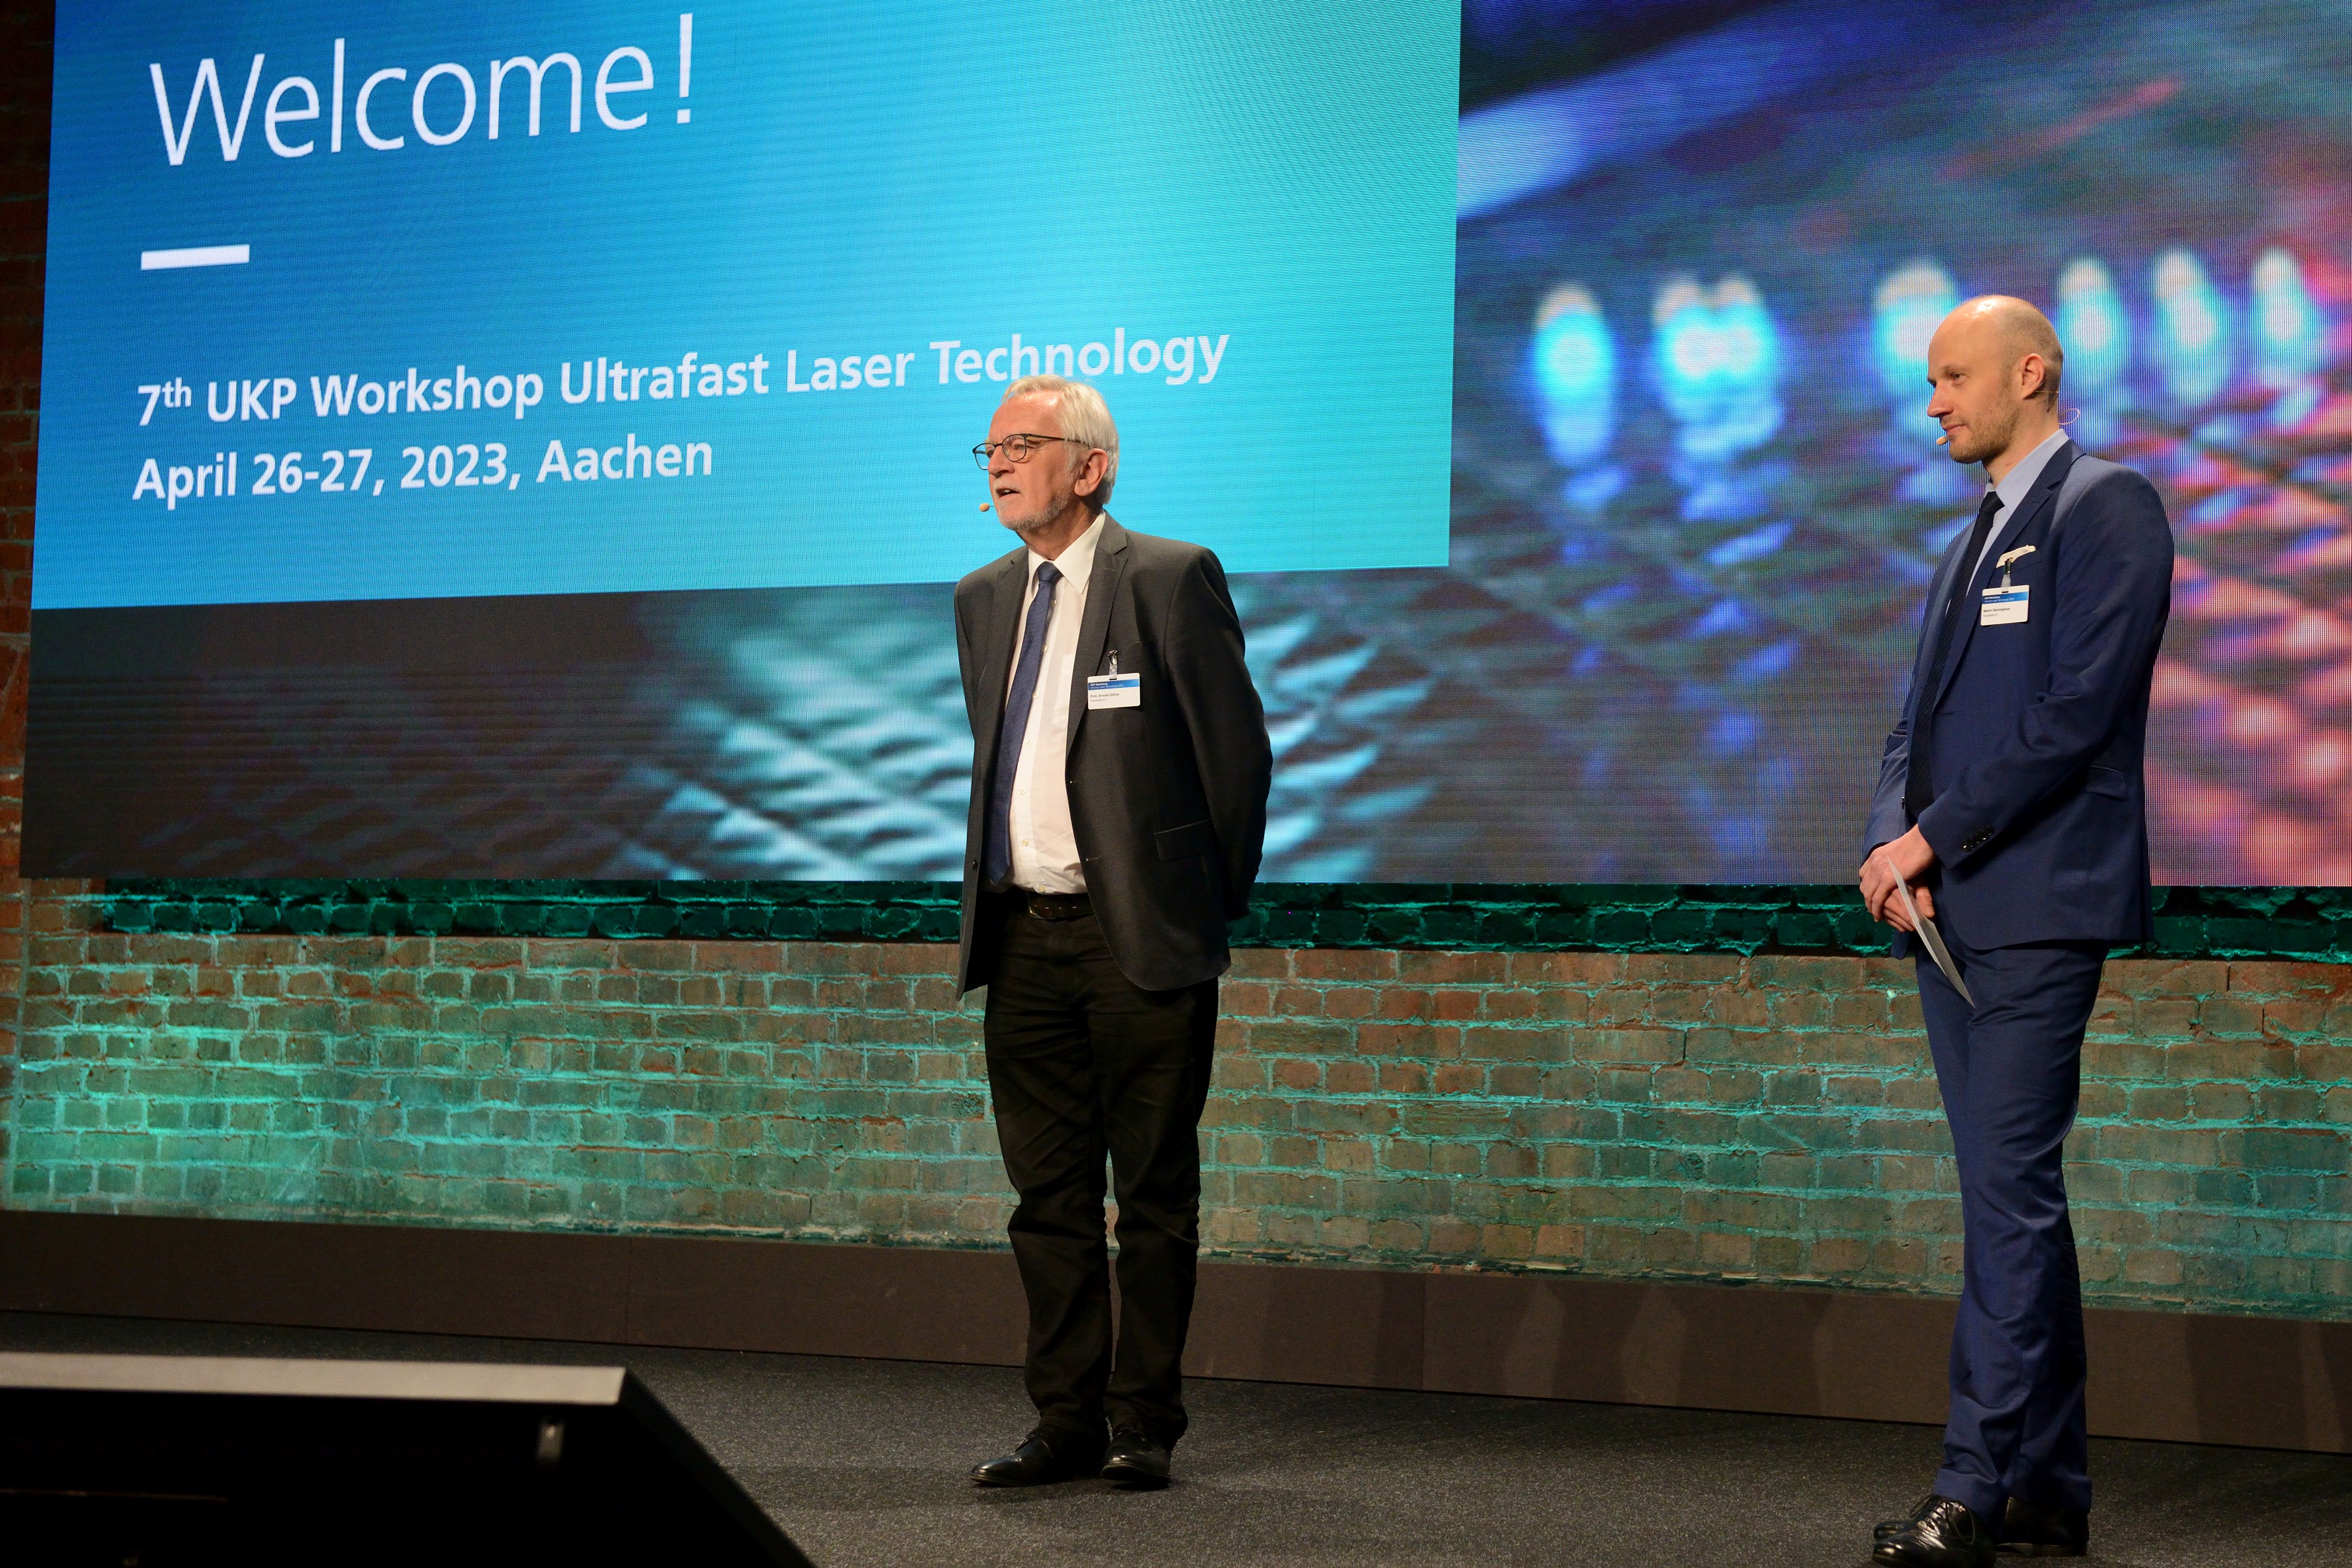 Professor Arnold Gillner and Martin Reininghaus organized the “7th UKP Workshop Ultrafast Laser Technology 2023” in Aachen.